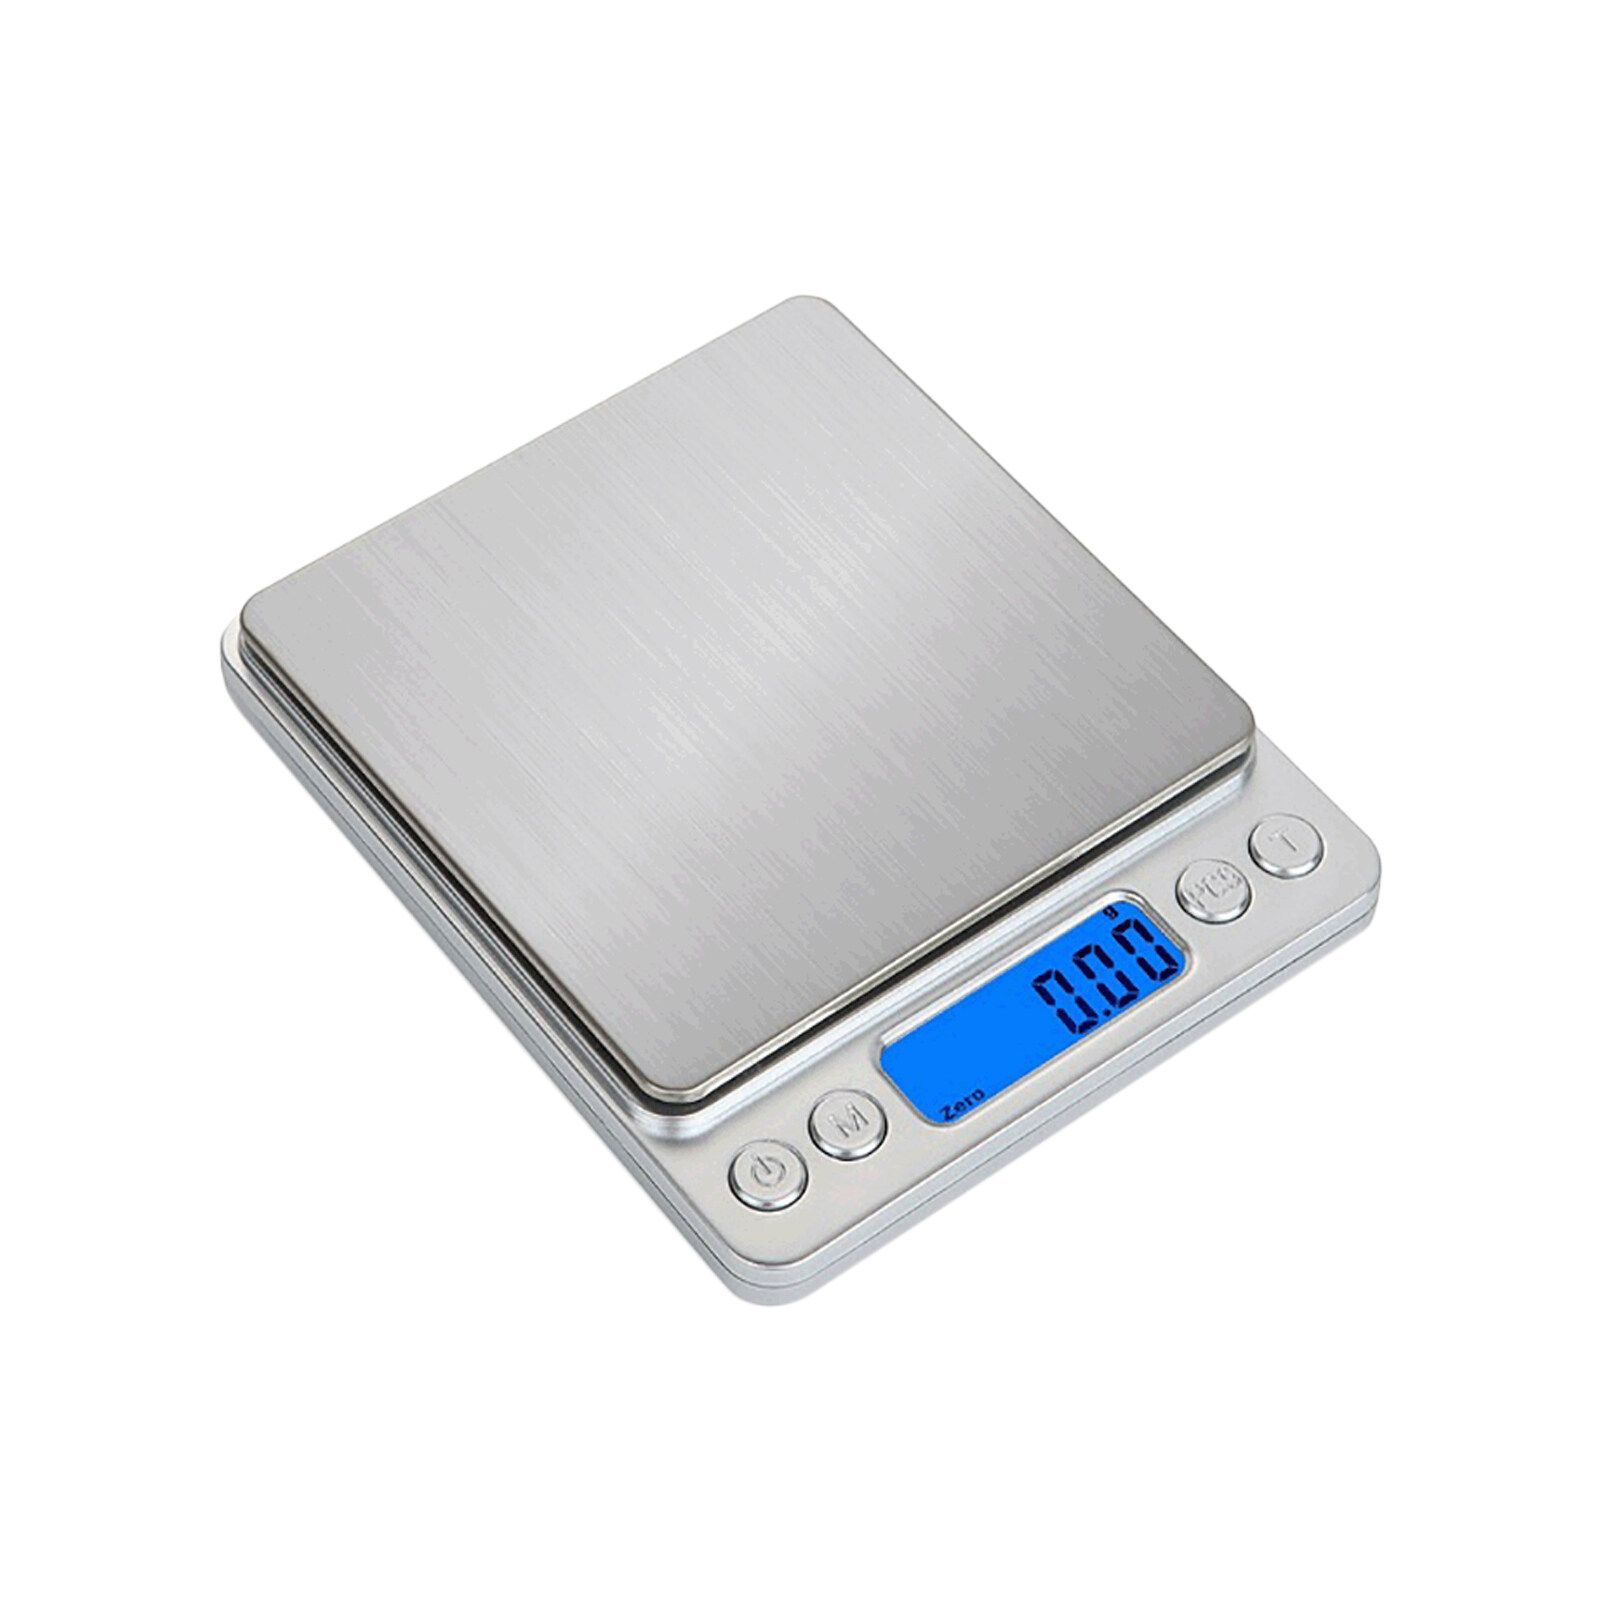 Digital Scale весы 500г. Superior Mini Digital platform Scale i-2000. Электронные весы 0.1-500гр. Мини весы электронные карманные 0.1-500 гр.